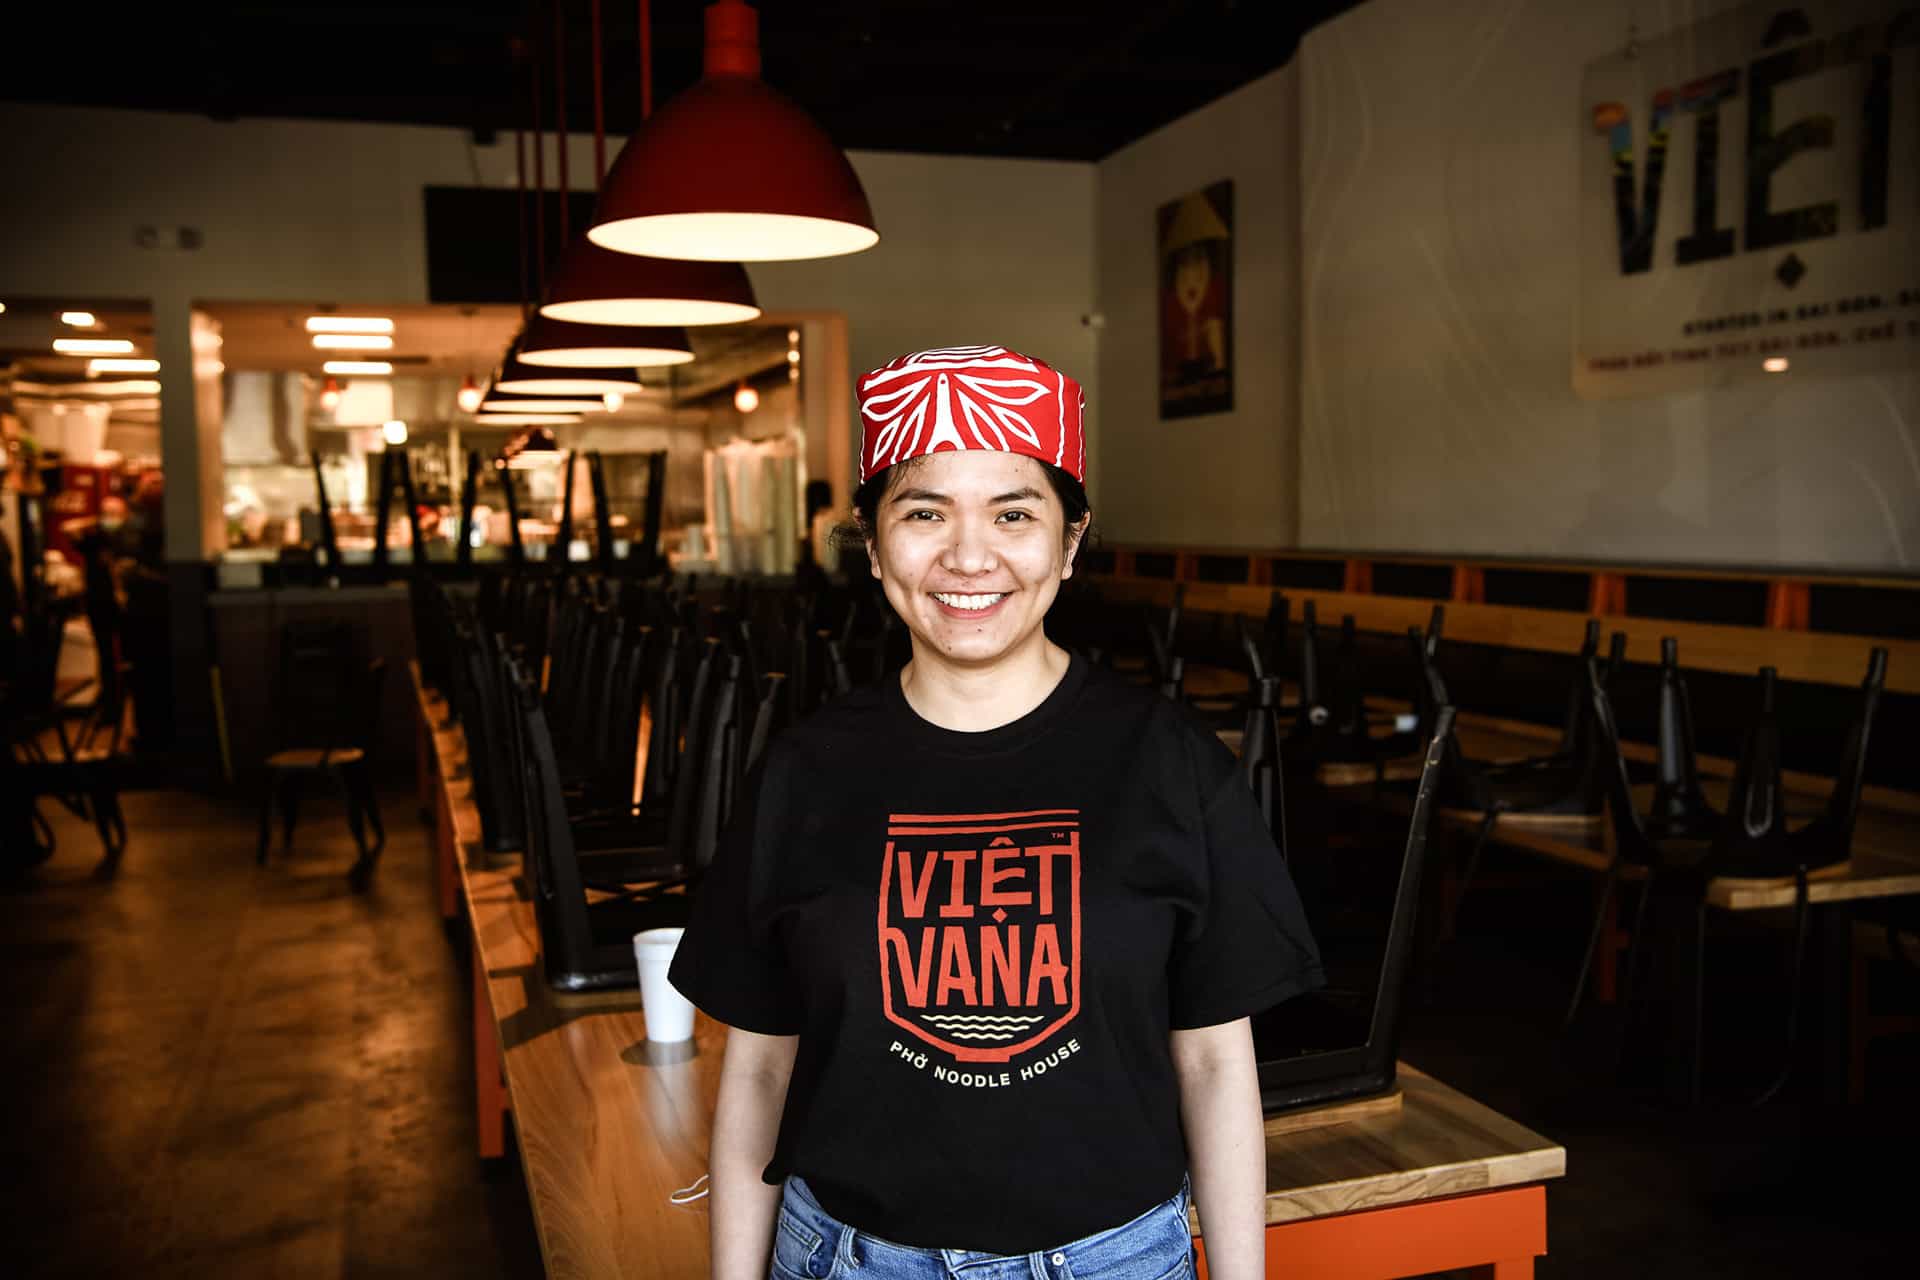 Vietvana - Vietnamese full service restaurant branding - uniform design